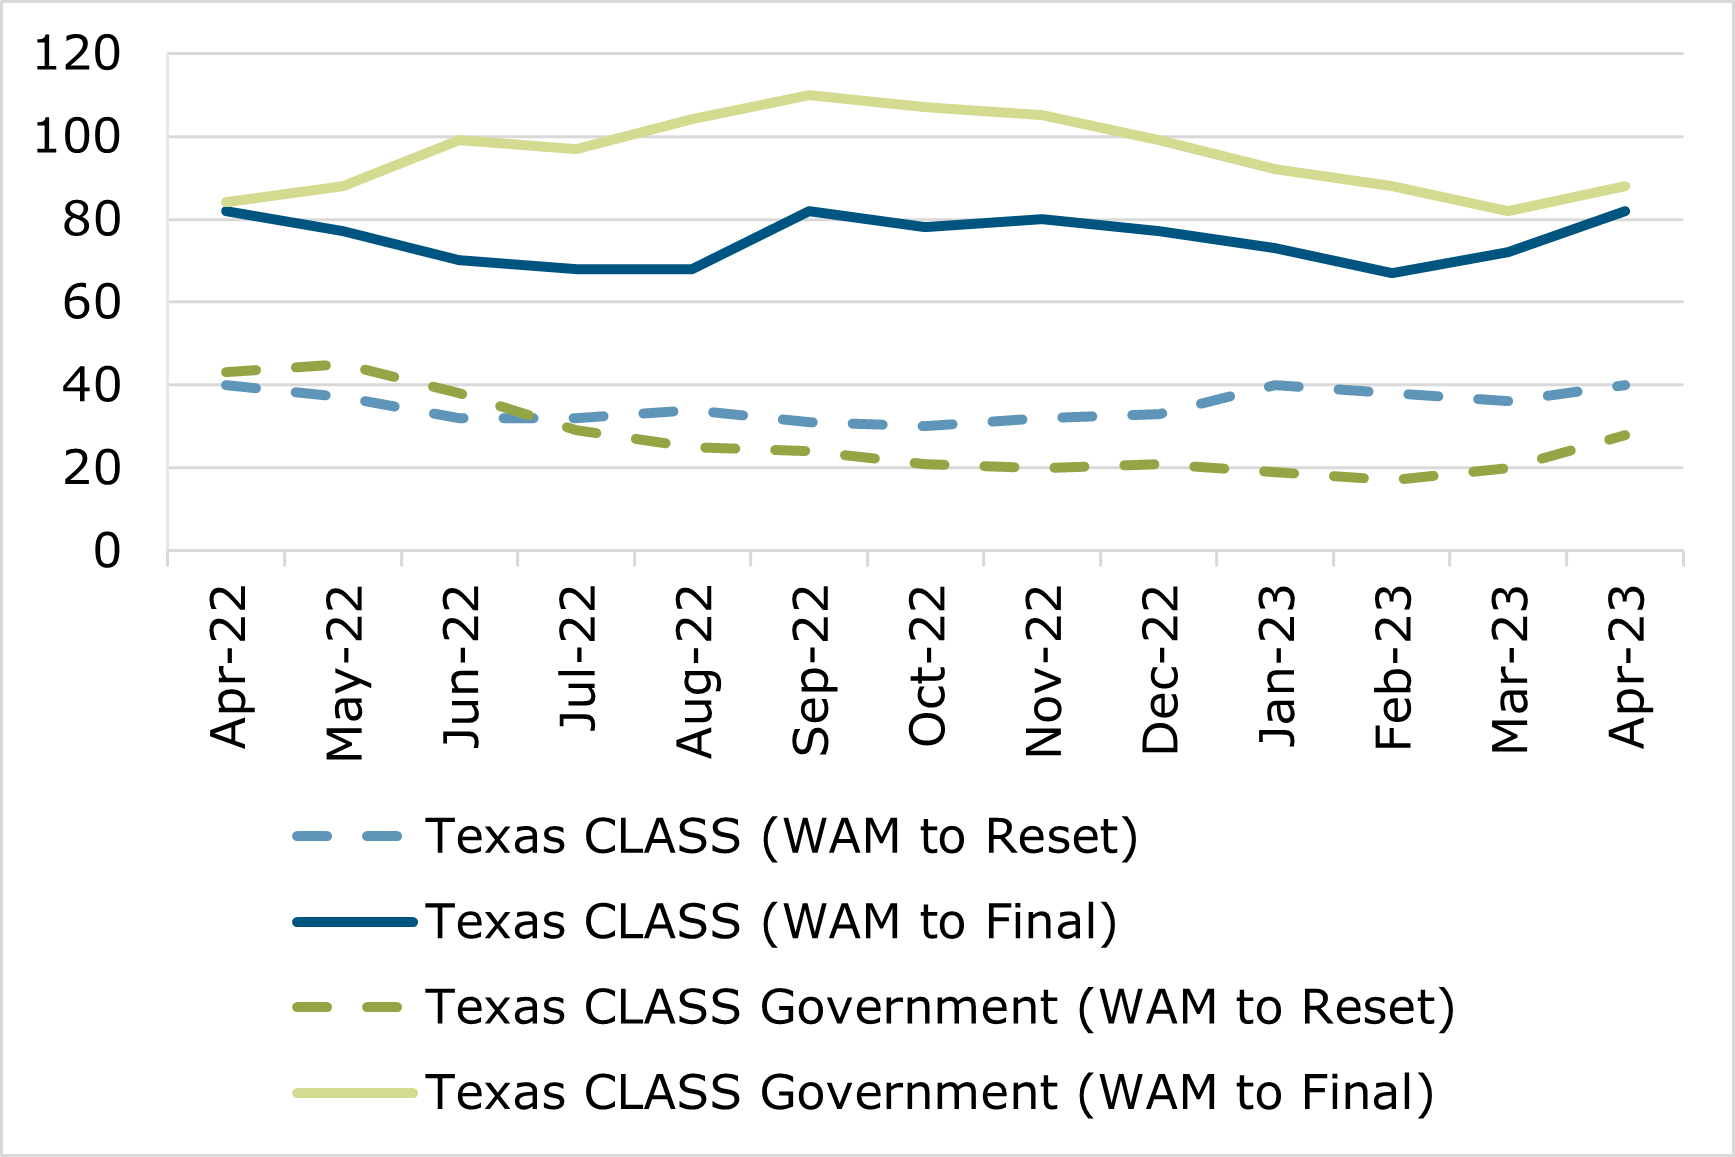 04.23 - Texas CLASS WAM Comparison